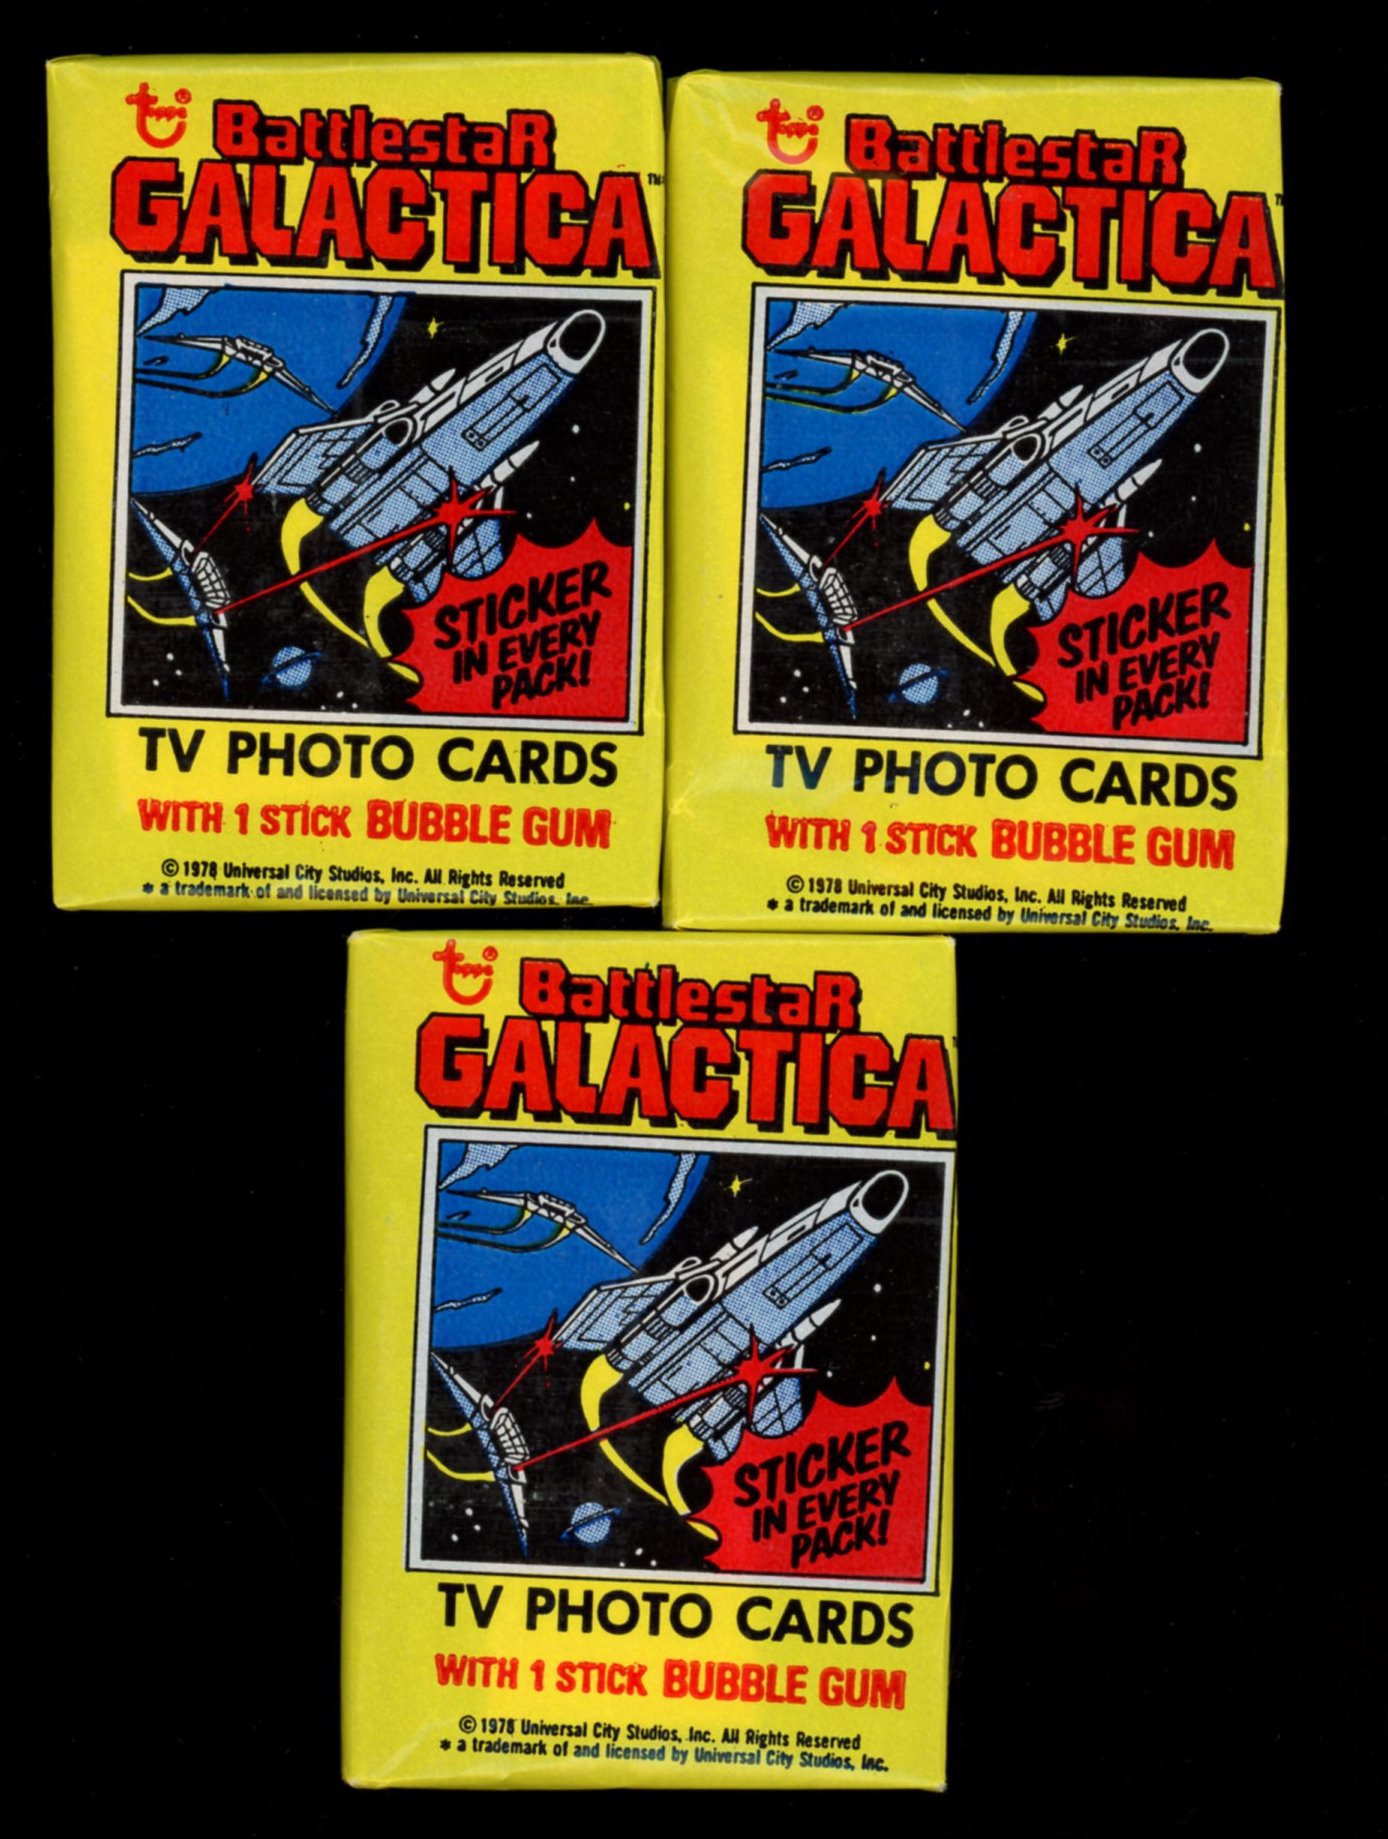 1978 TOPPS BATTLESTAR GALACTICA TRADING CARDS WAX PACKS (3) #22140